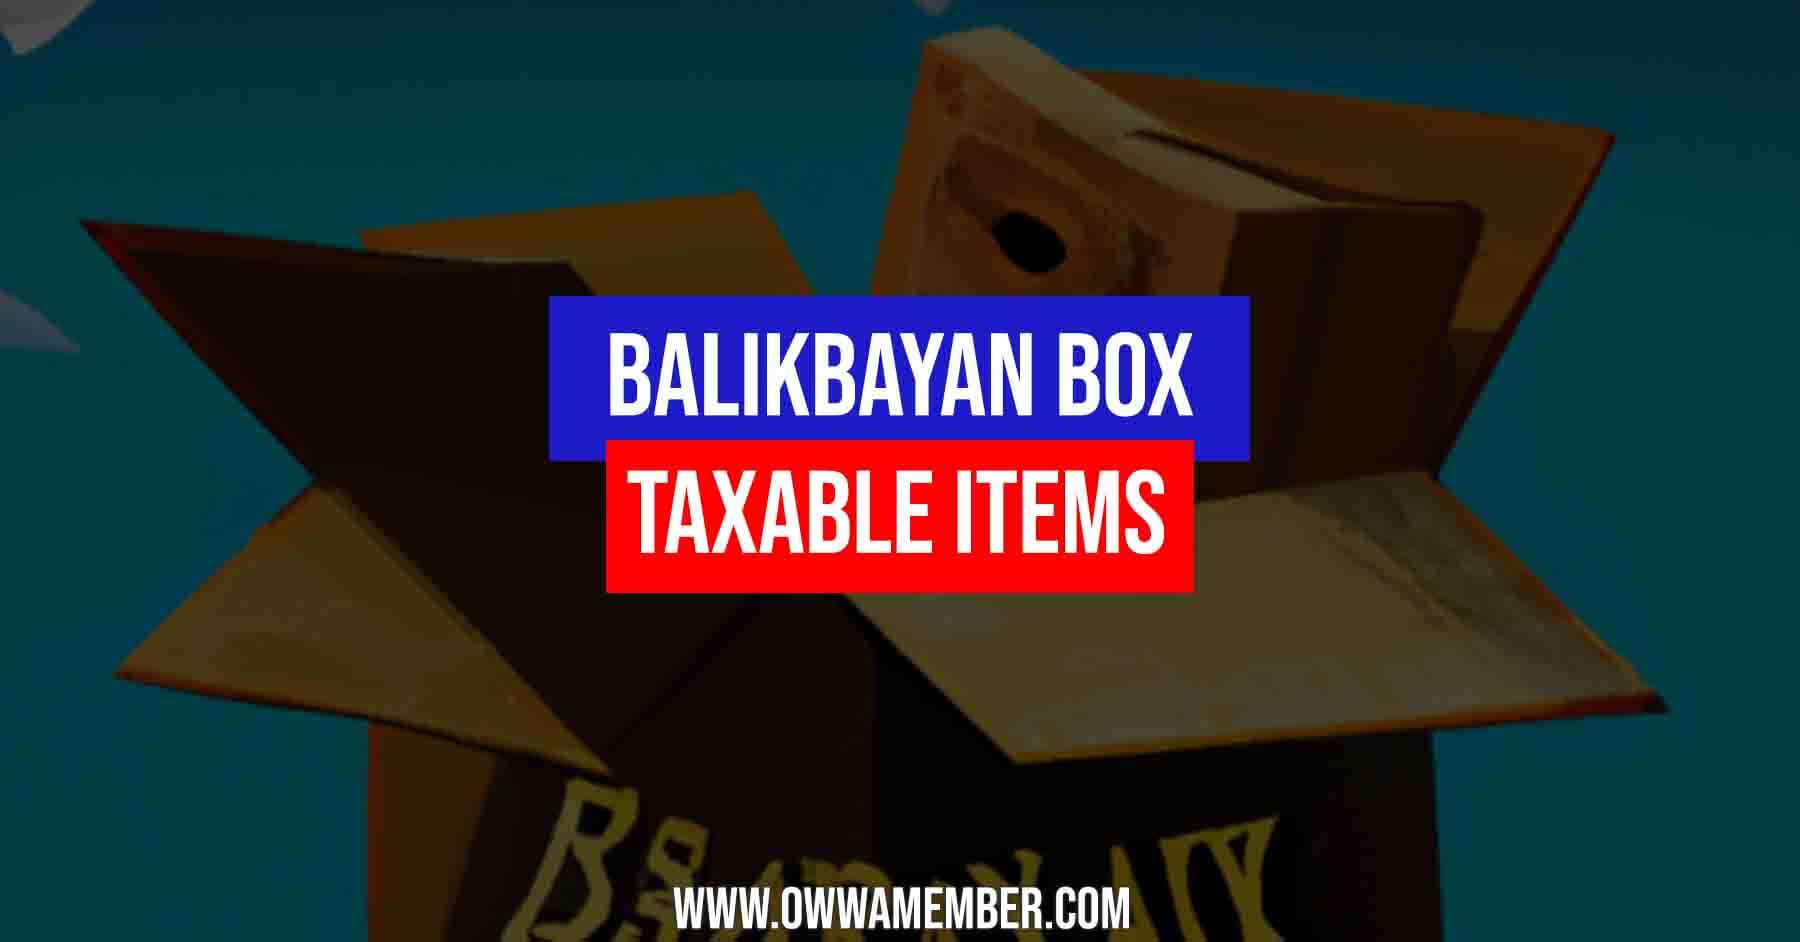 balikbayan box taxes and taxable items